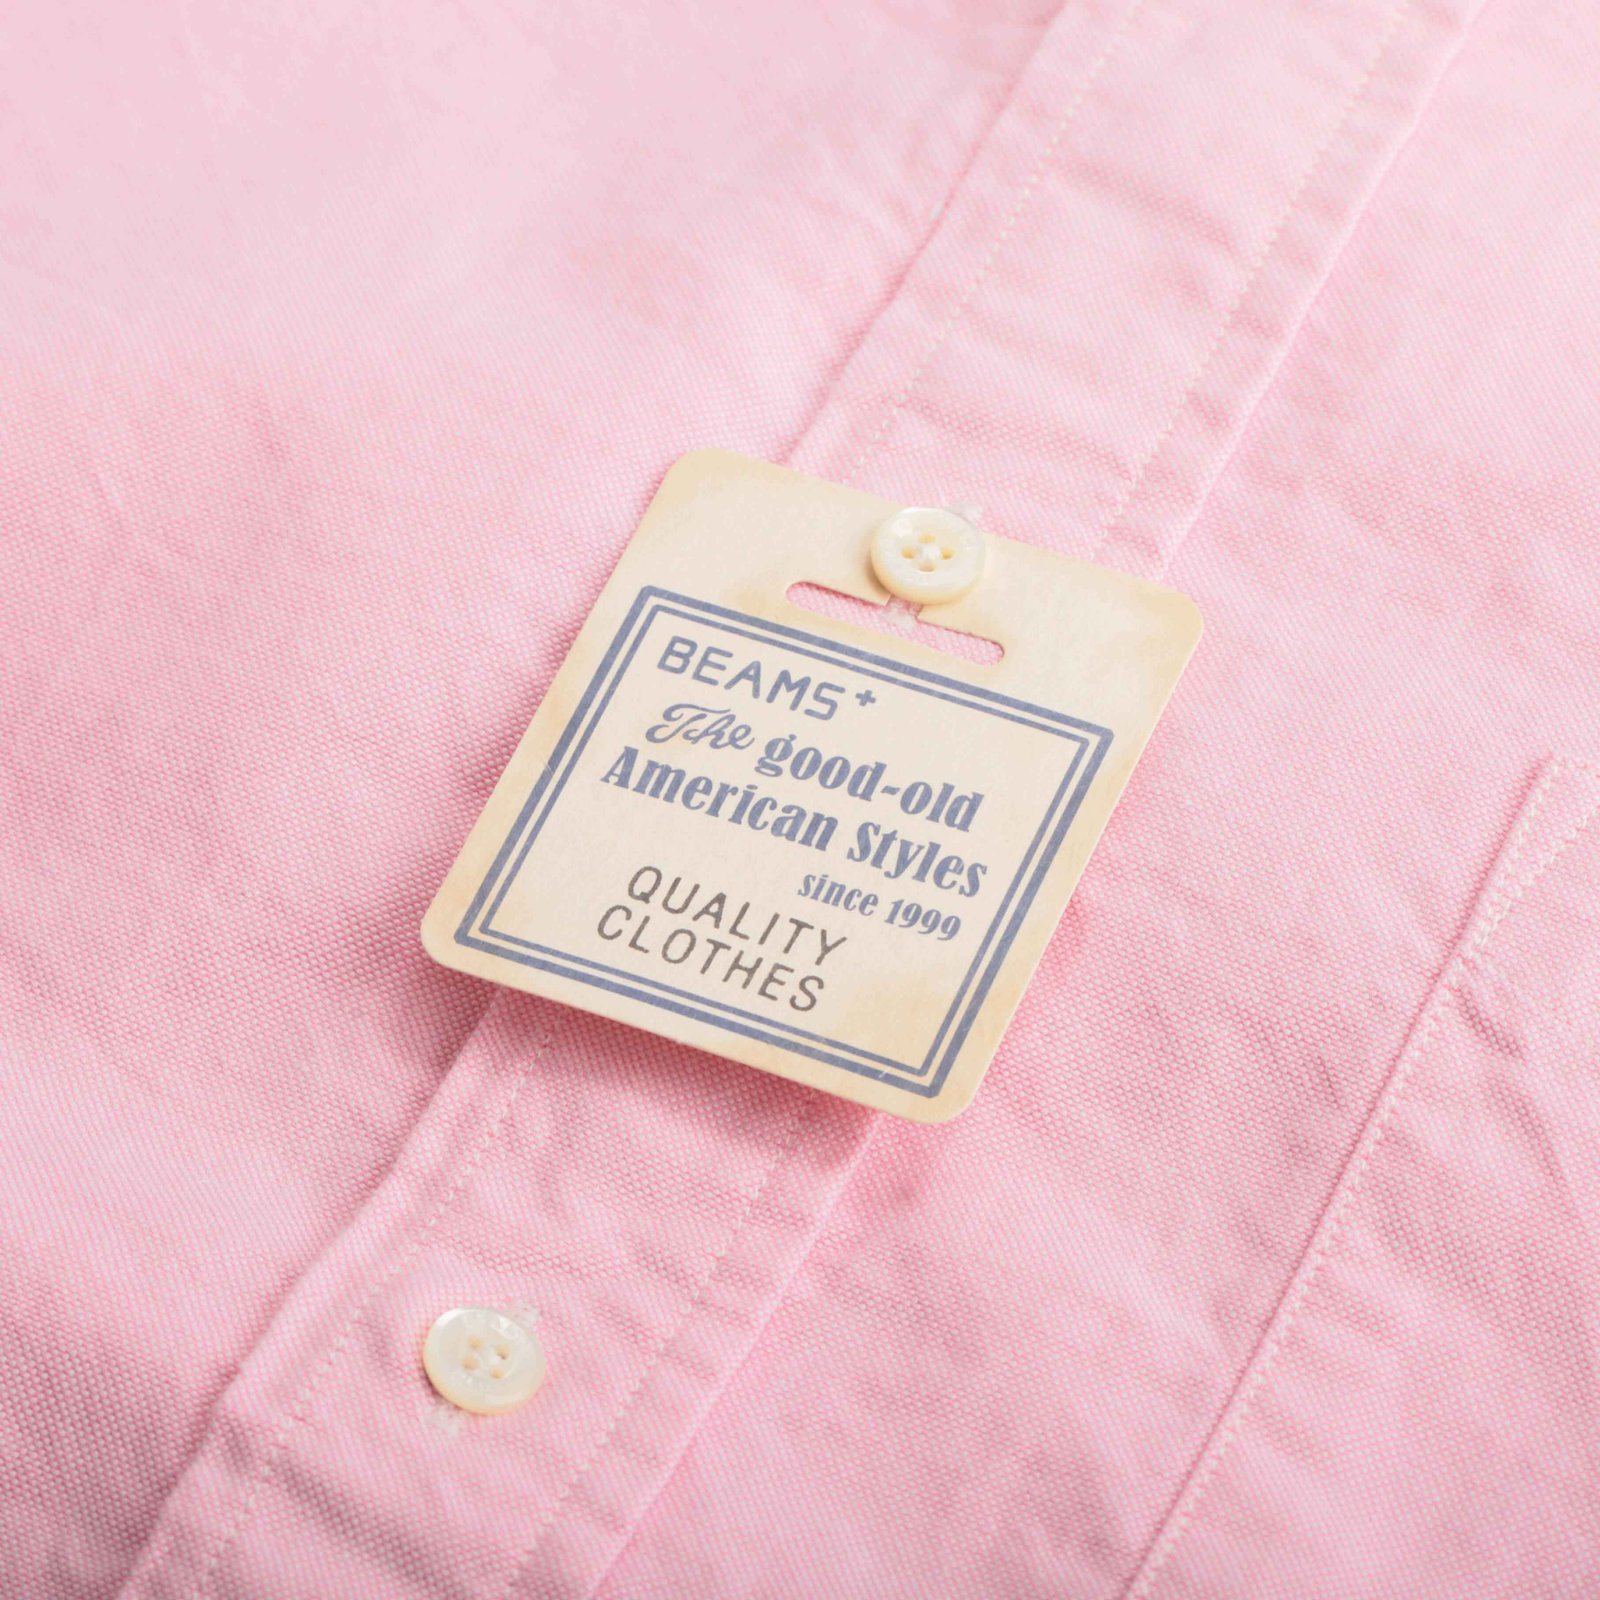 BD Oxford Shirt Pink